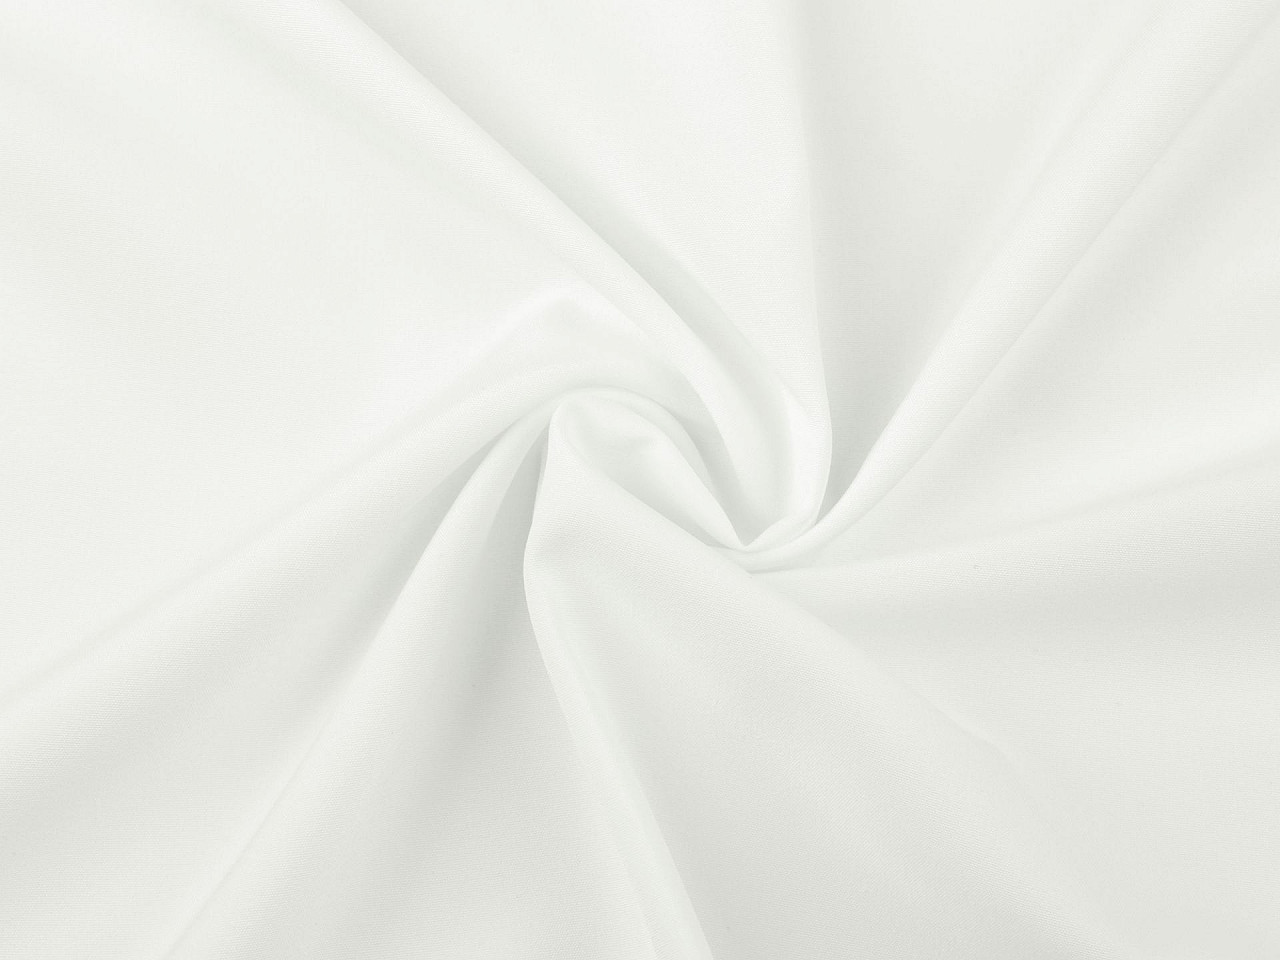 Šatovka hladká, barva 1 (006) bílá